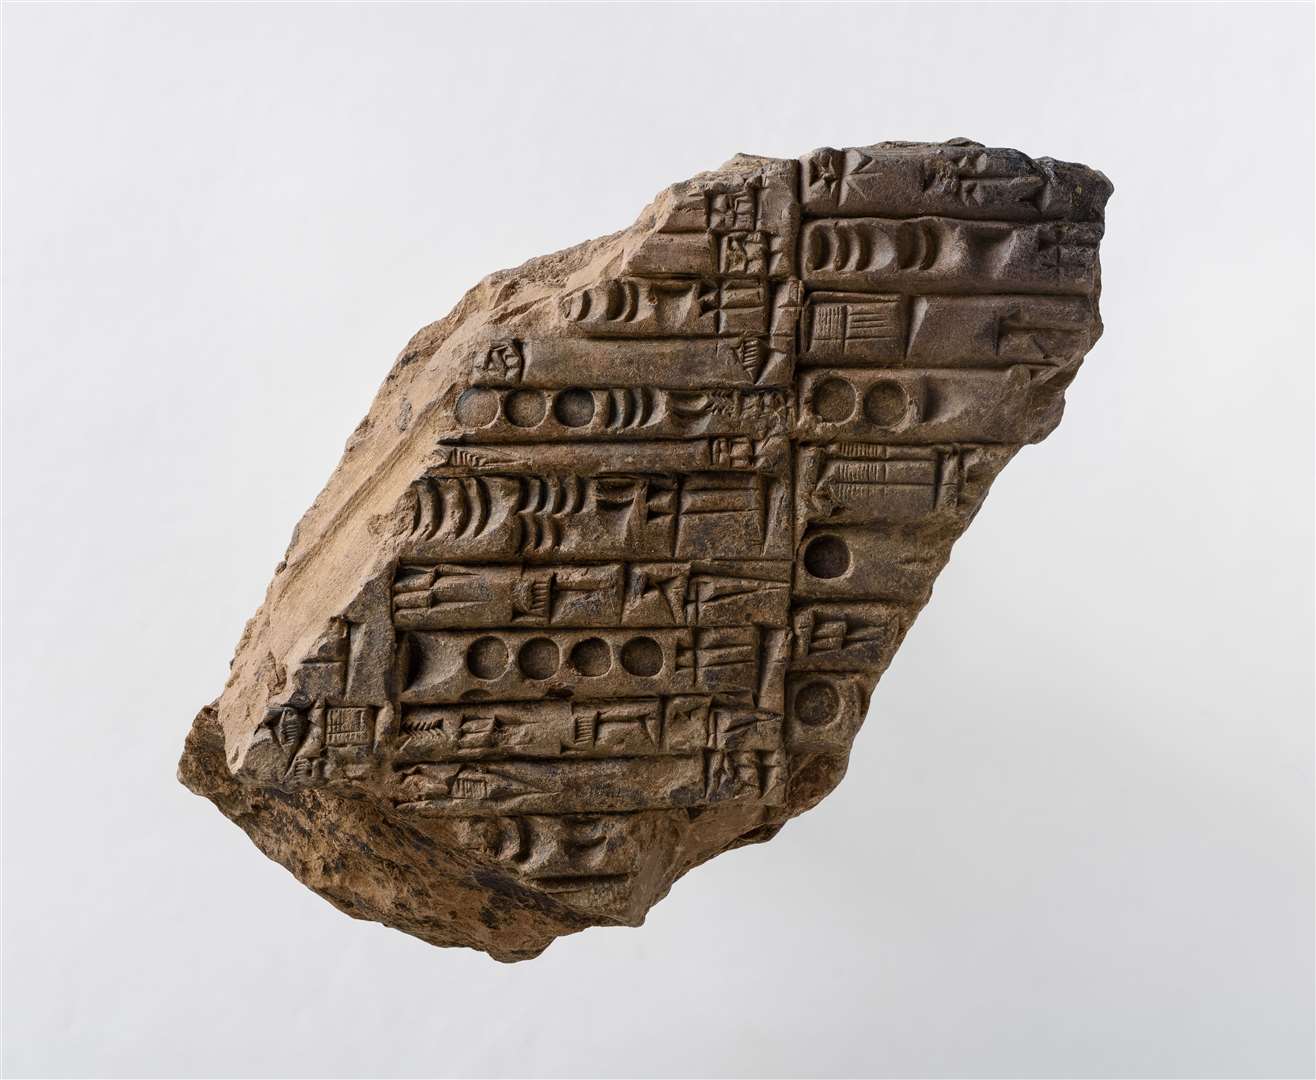 Cuneiform tablet (The Girsu Project/PA)